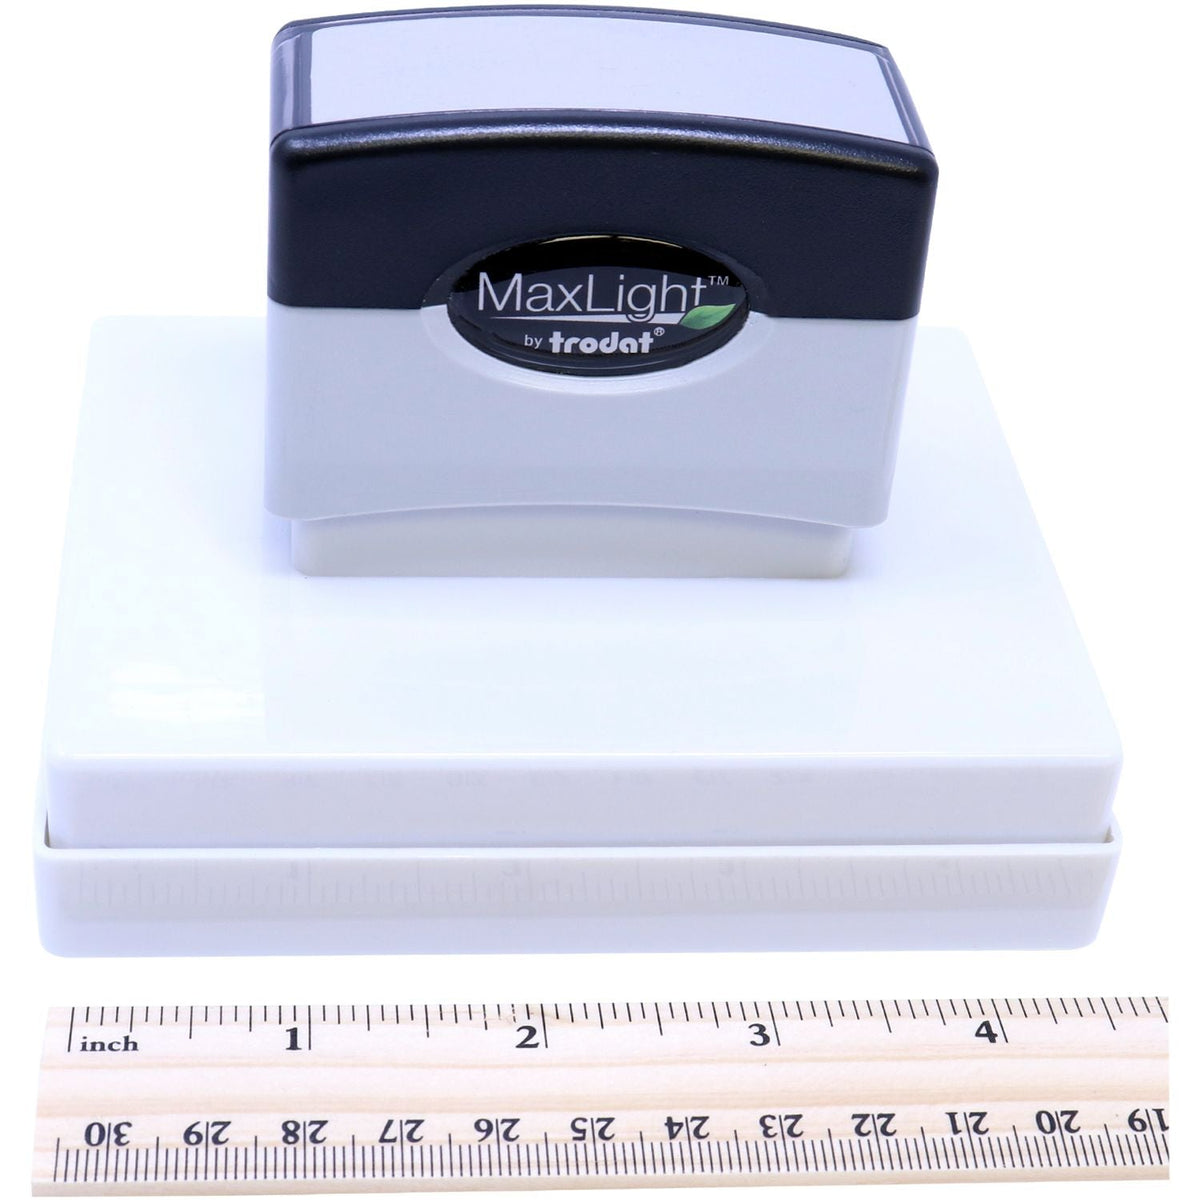 Maxlight Custom Stamp Xl2 700 Front Ruler